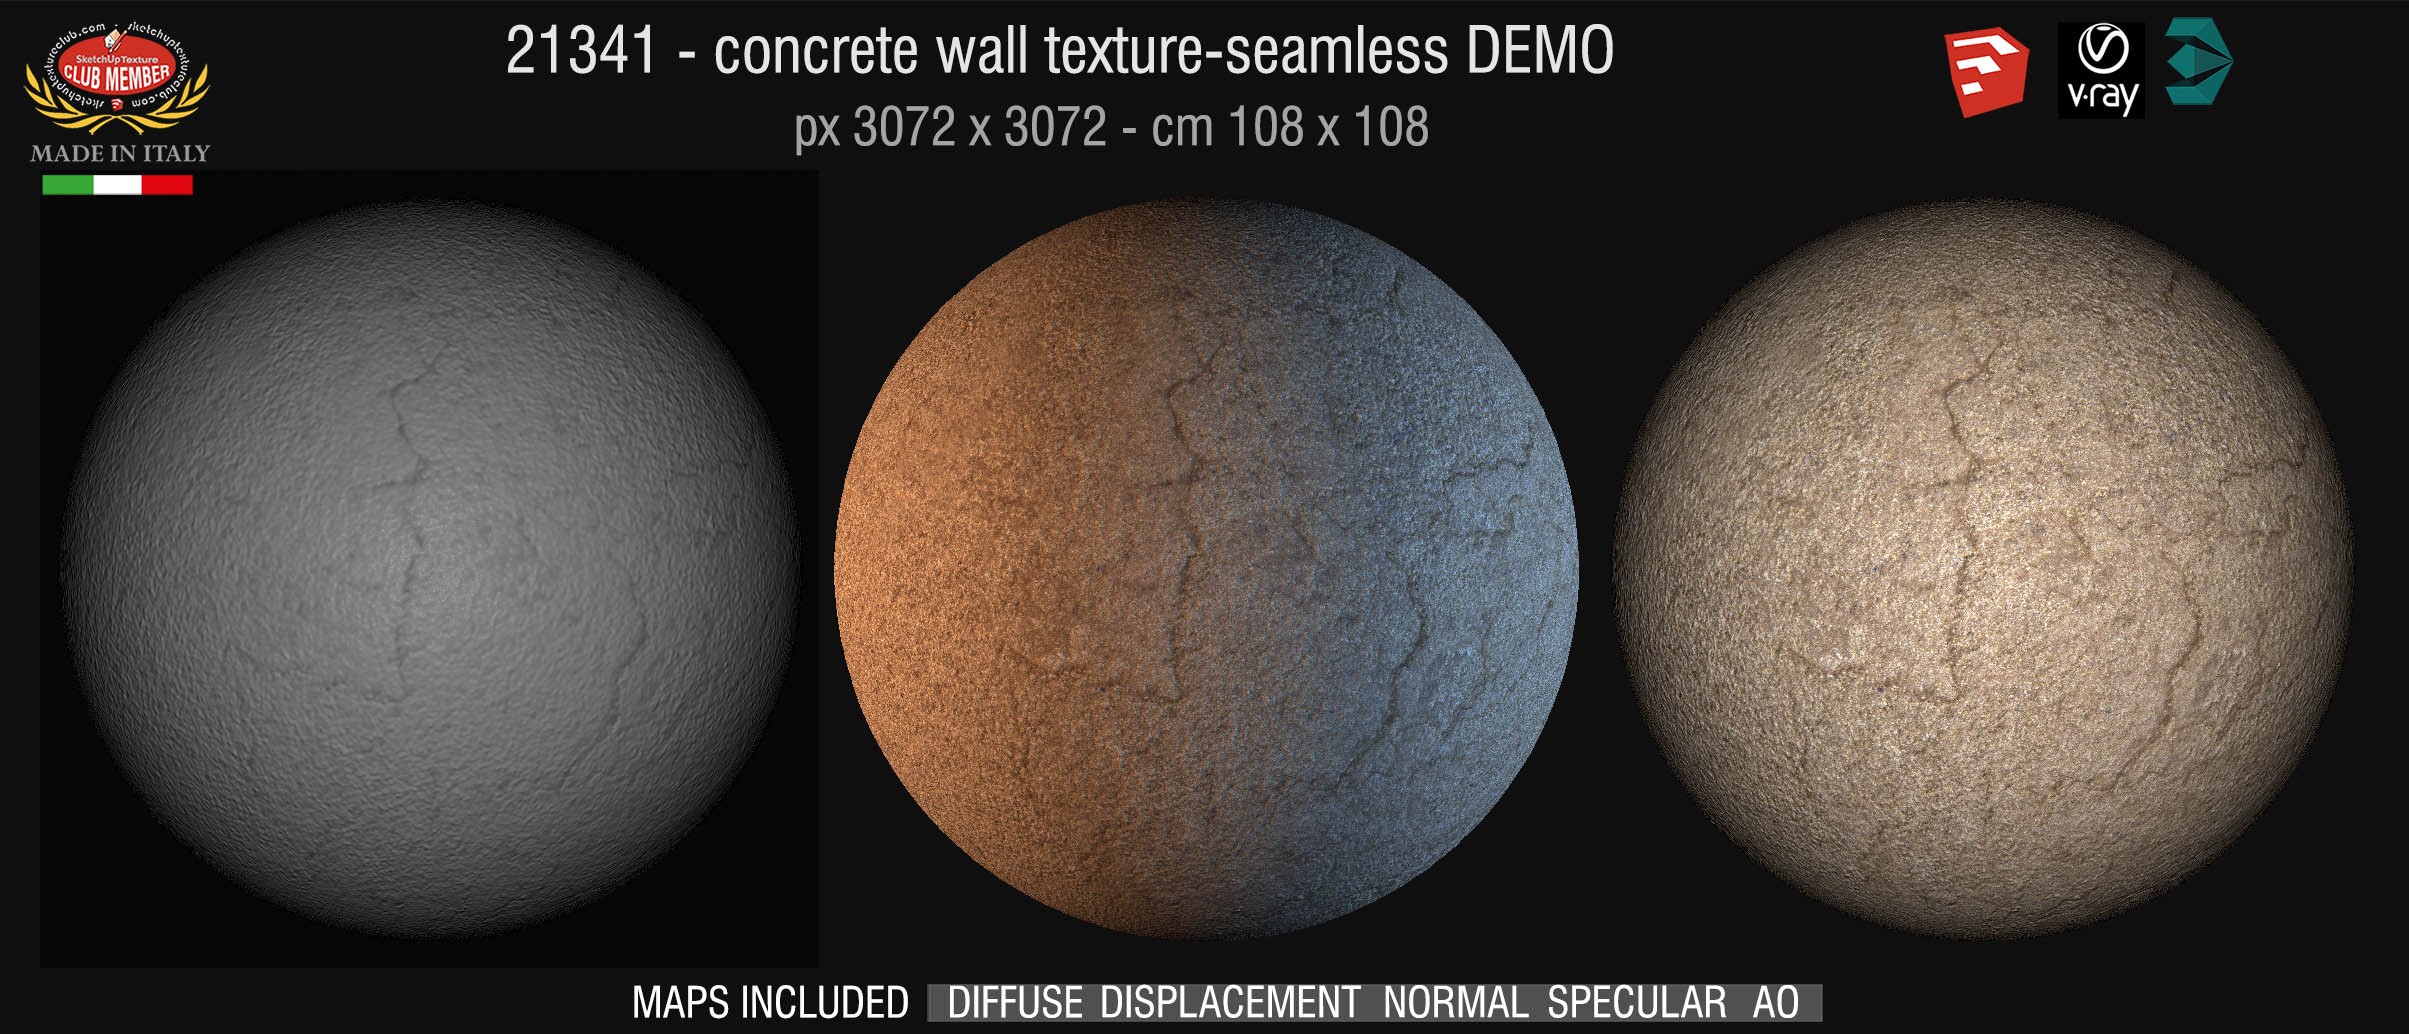 21343 HR concrete wall texture seamless + maps DEMO